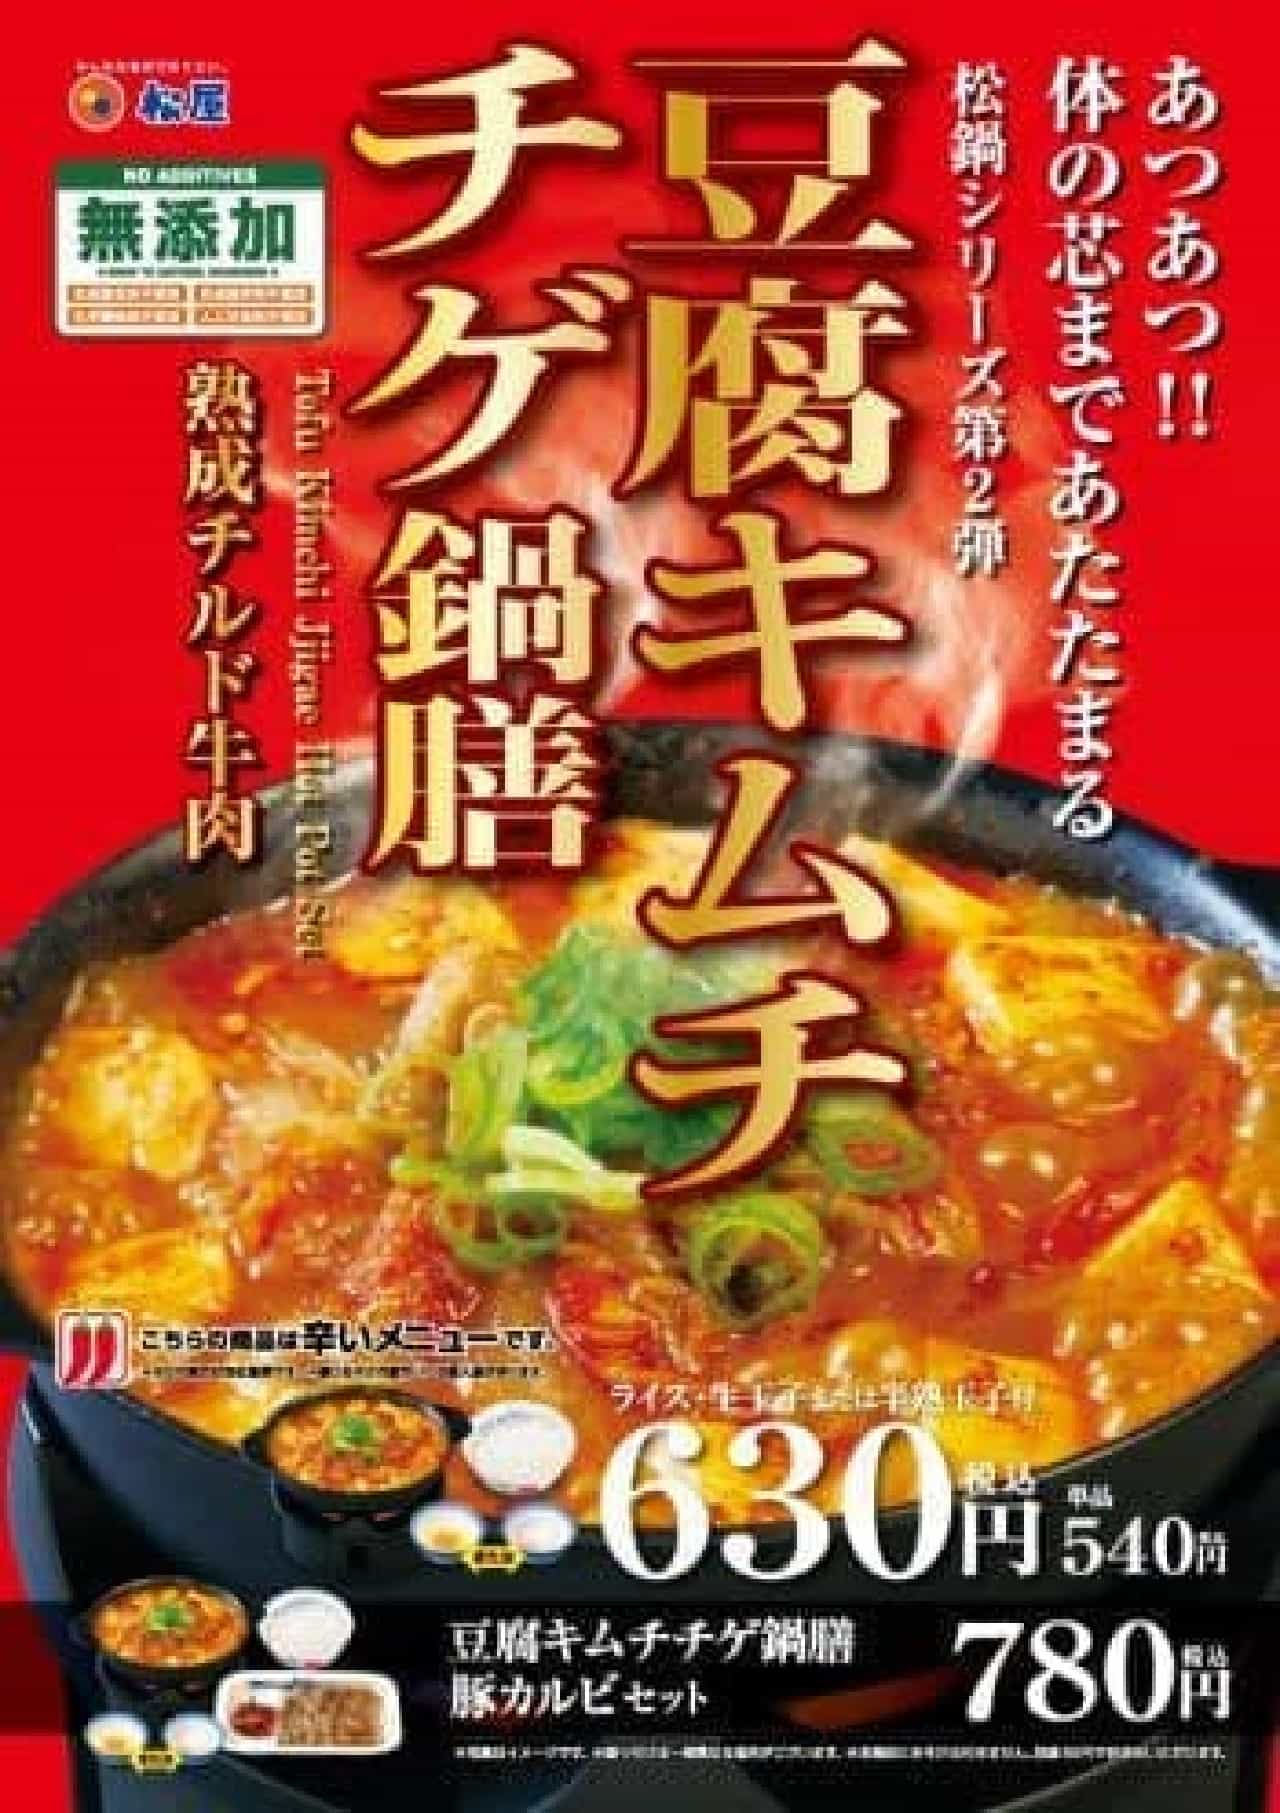 Matsuya "Tofu Kimchi Jjigae Hot Pot Set"